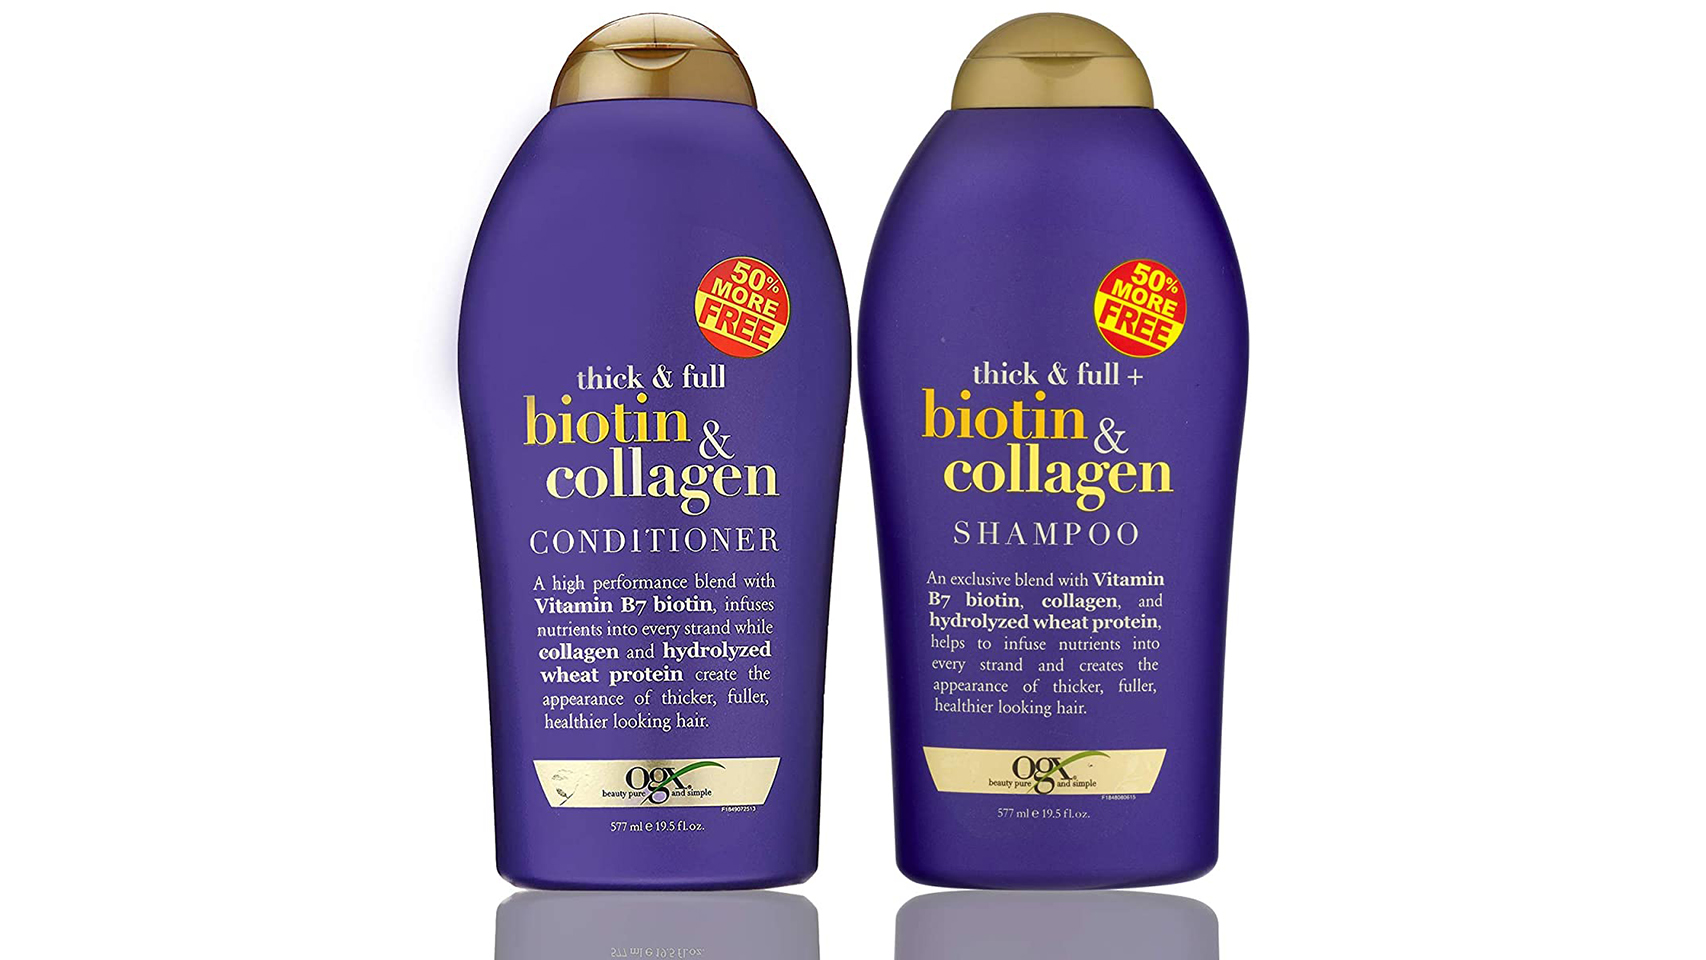 OGX biotin and collagen shampoo and conditioner